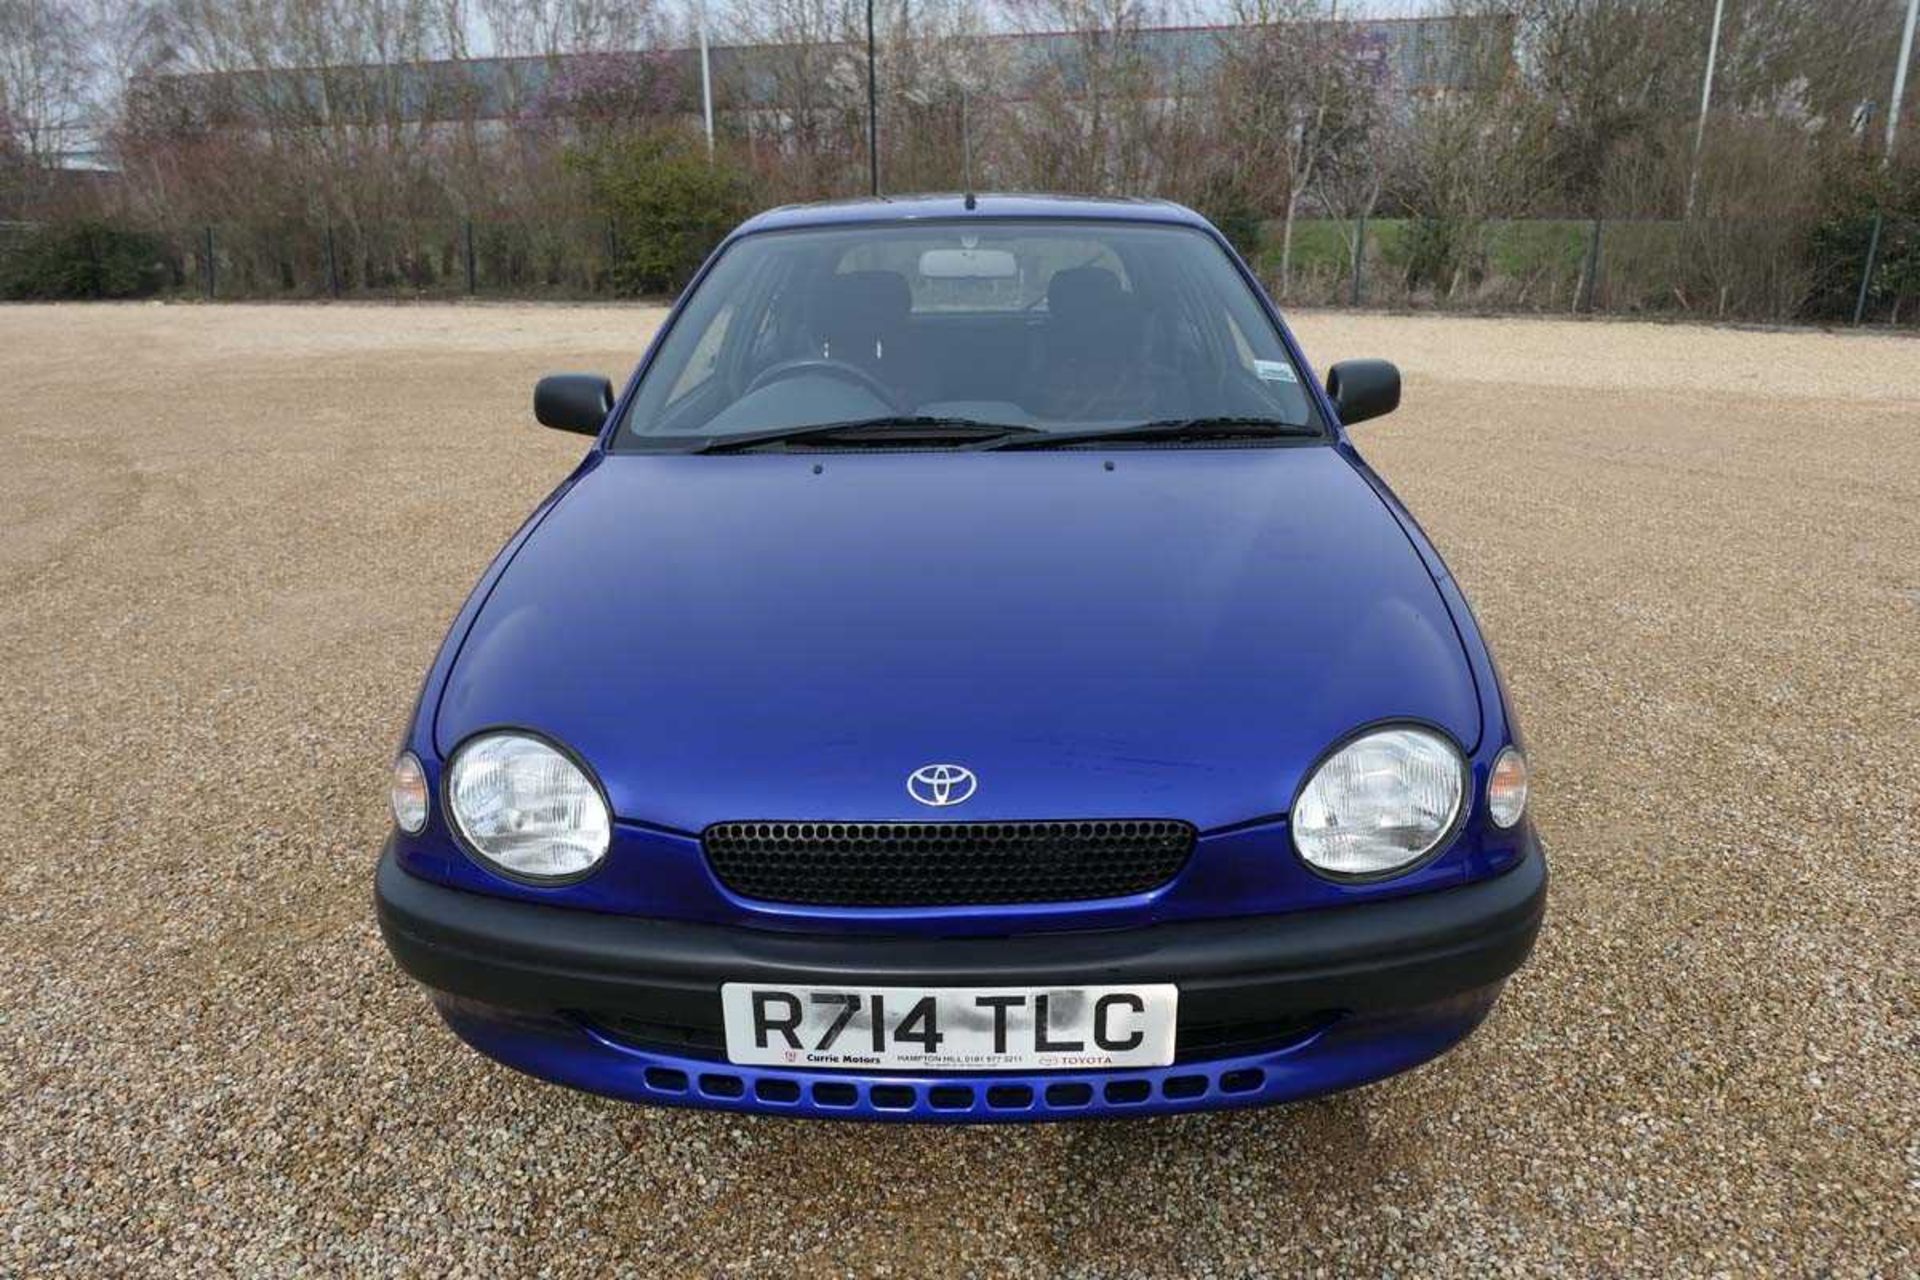 Toyota Corolla SR in blue, registration plate R714 TLC, first registered 29.06.1998, 3 door - Image 2 of 12